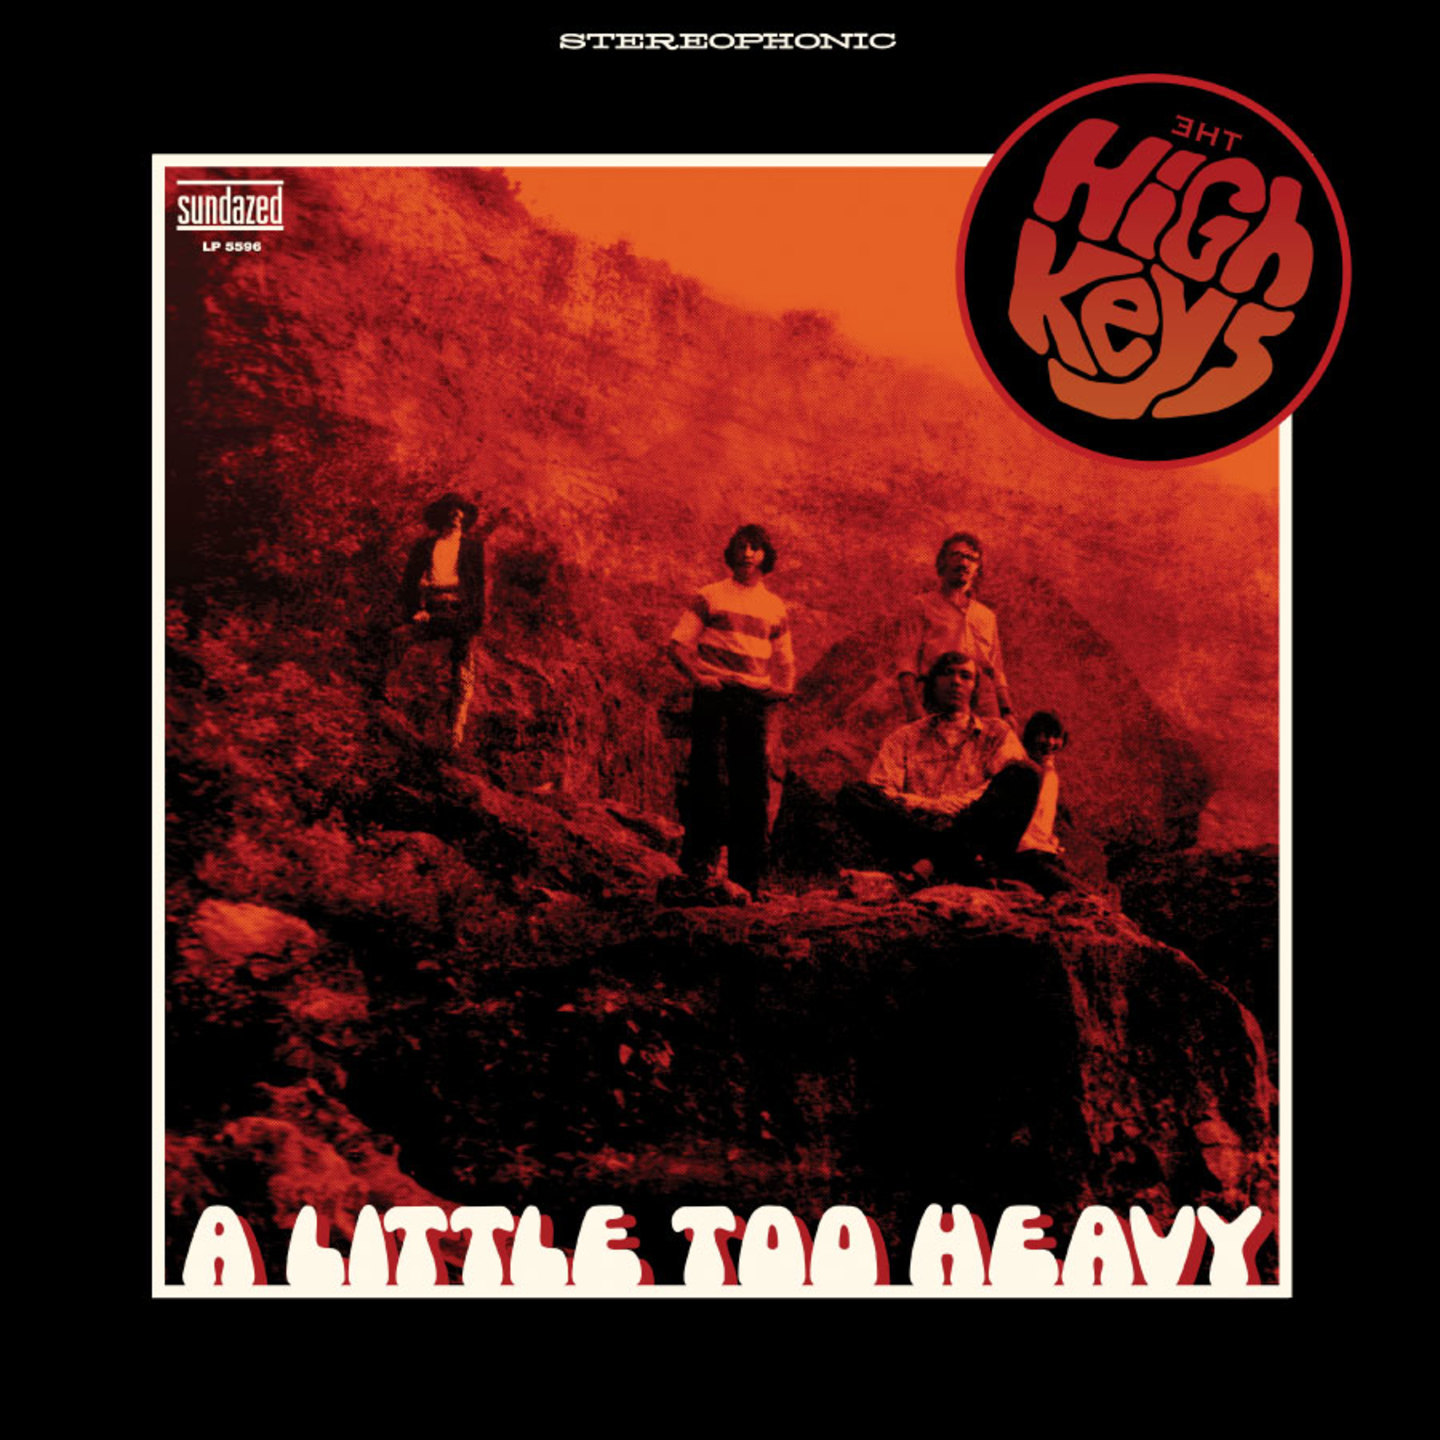 HIGH KEYS, THE - A Little Too Heavy LP Orange Vinyl